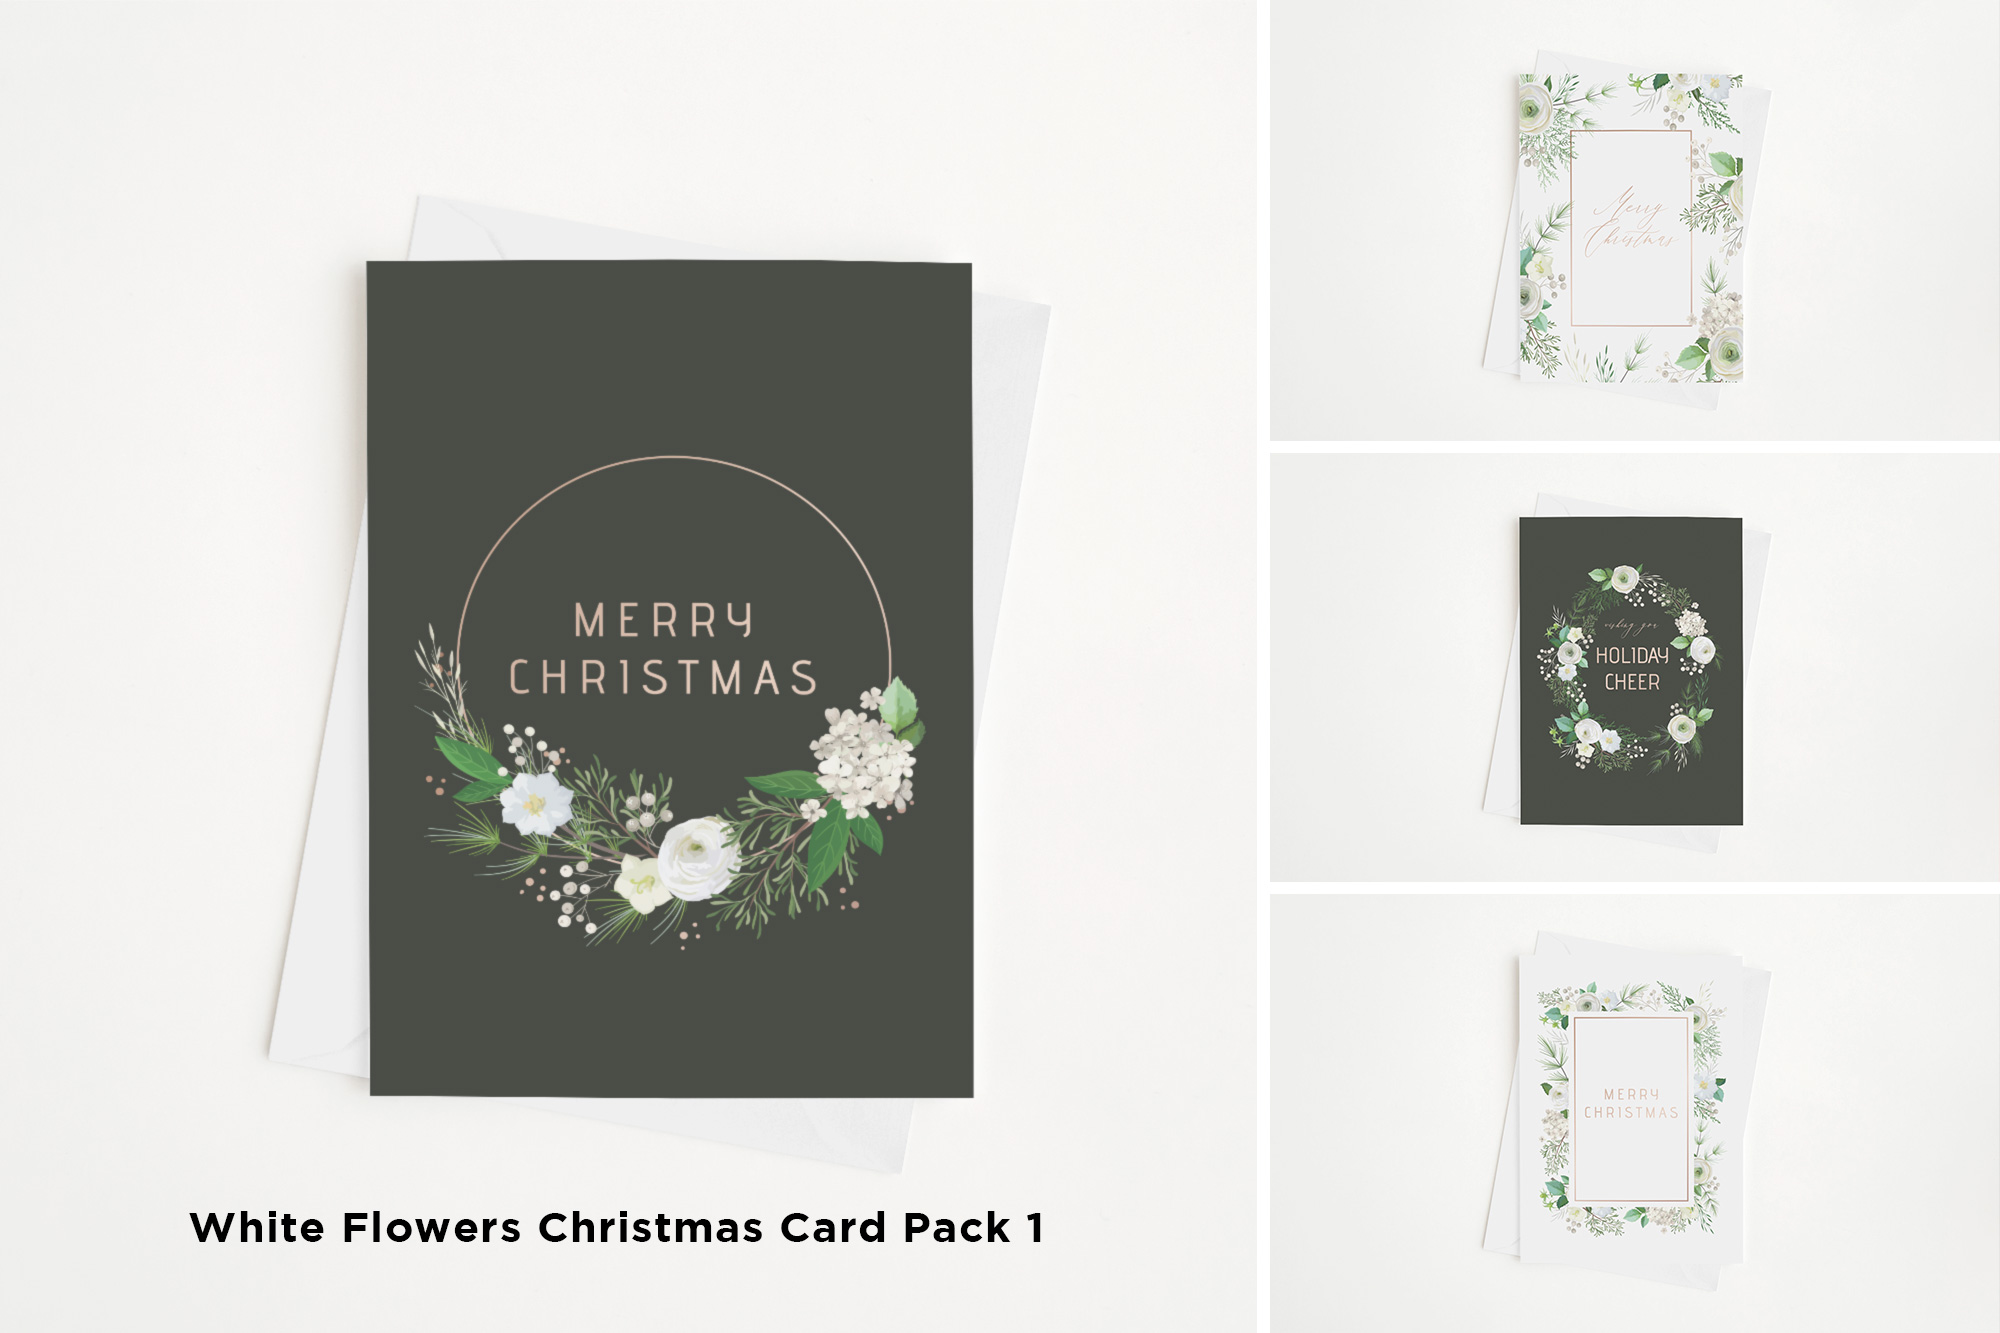 White Flowers Christmas Card Pack 1 Mockup